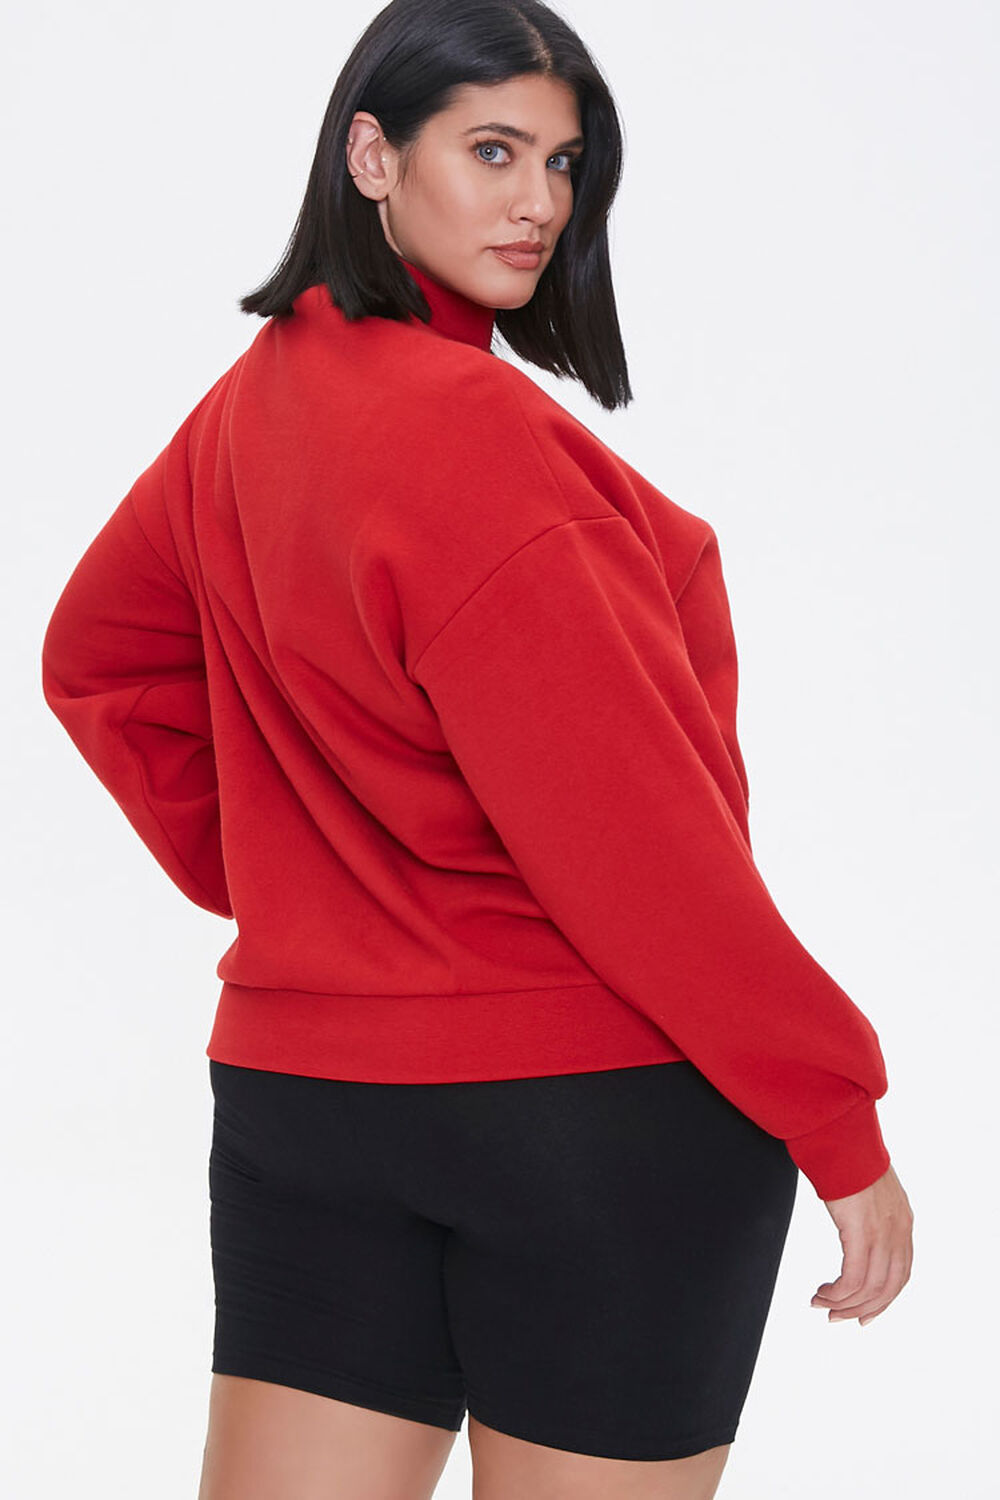 RED/MULTI Plus Size Marilyn Monroe Sweatshirt, image 3